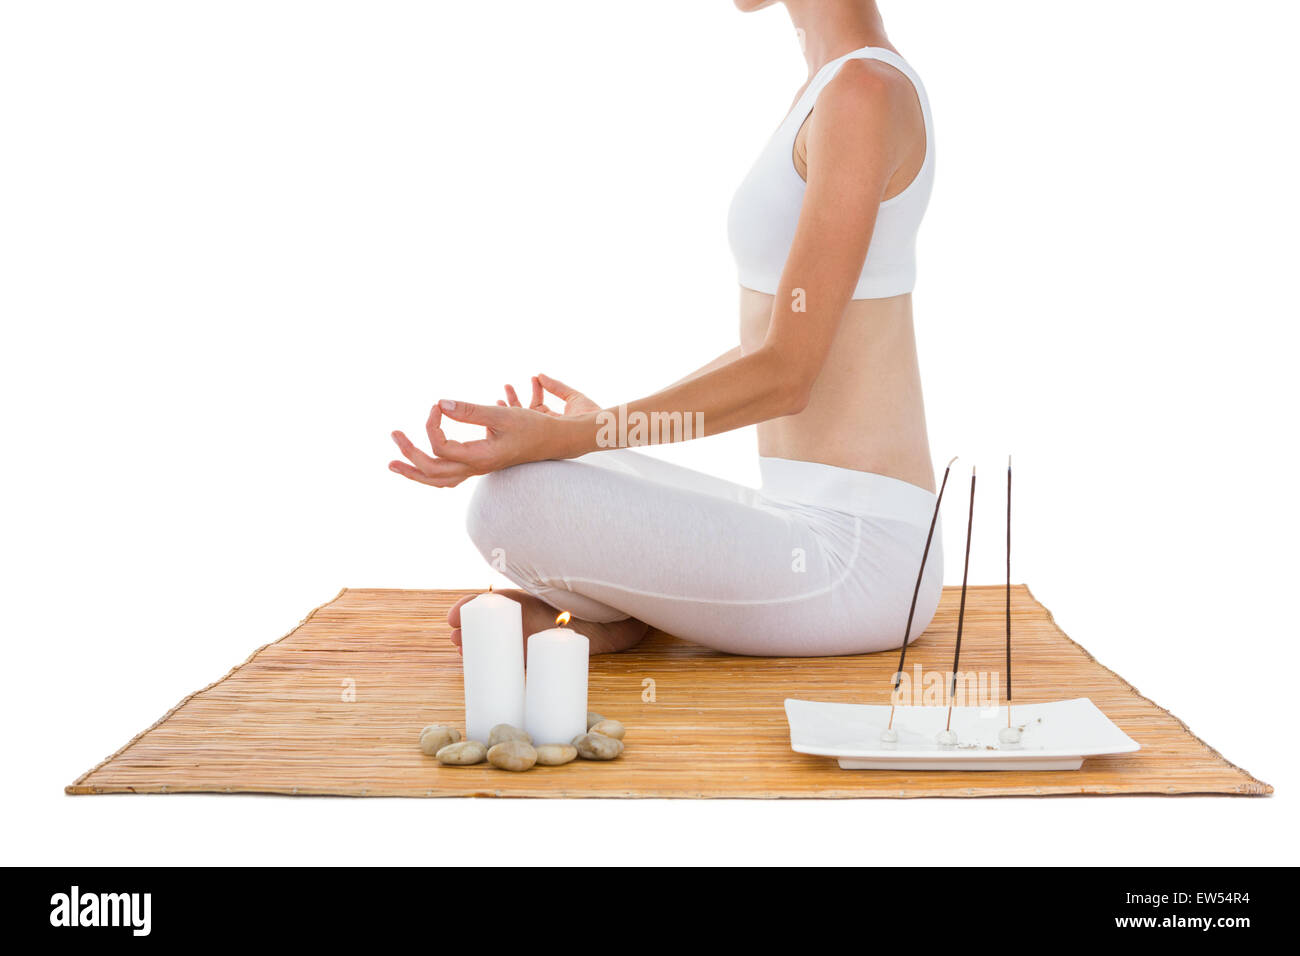 Fit woman meditating on bamboo mat Stock Photo